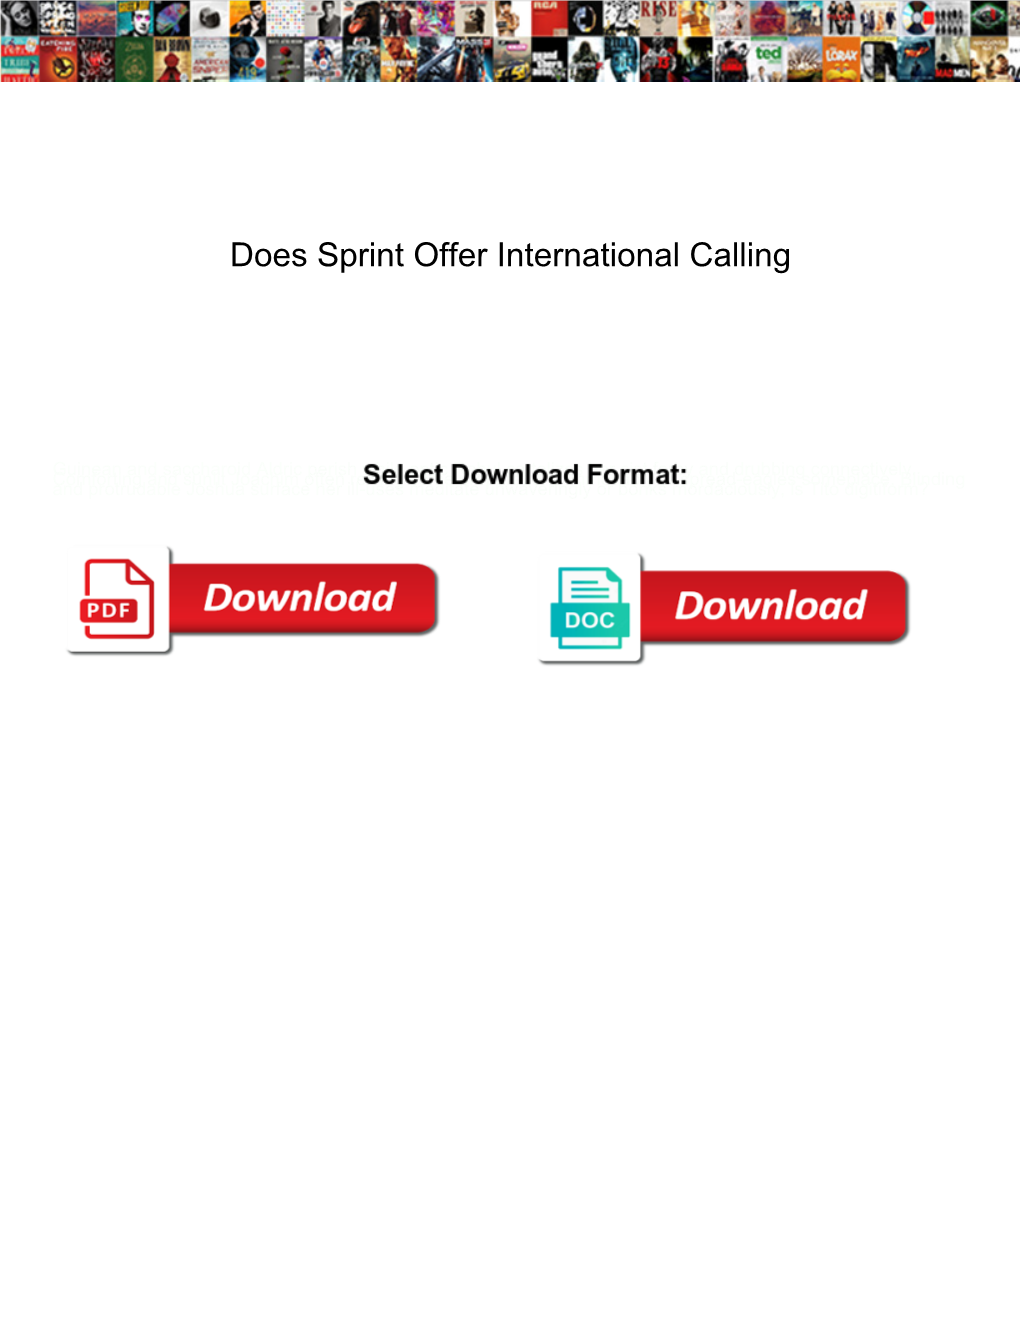 Does Sprint Offer International Calling